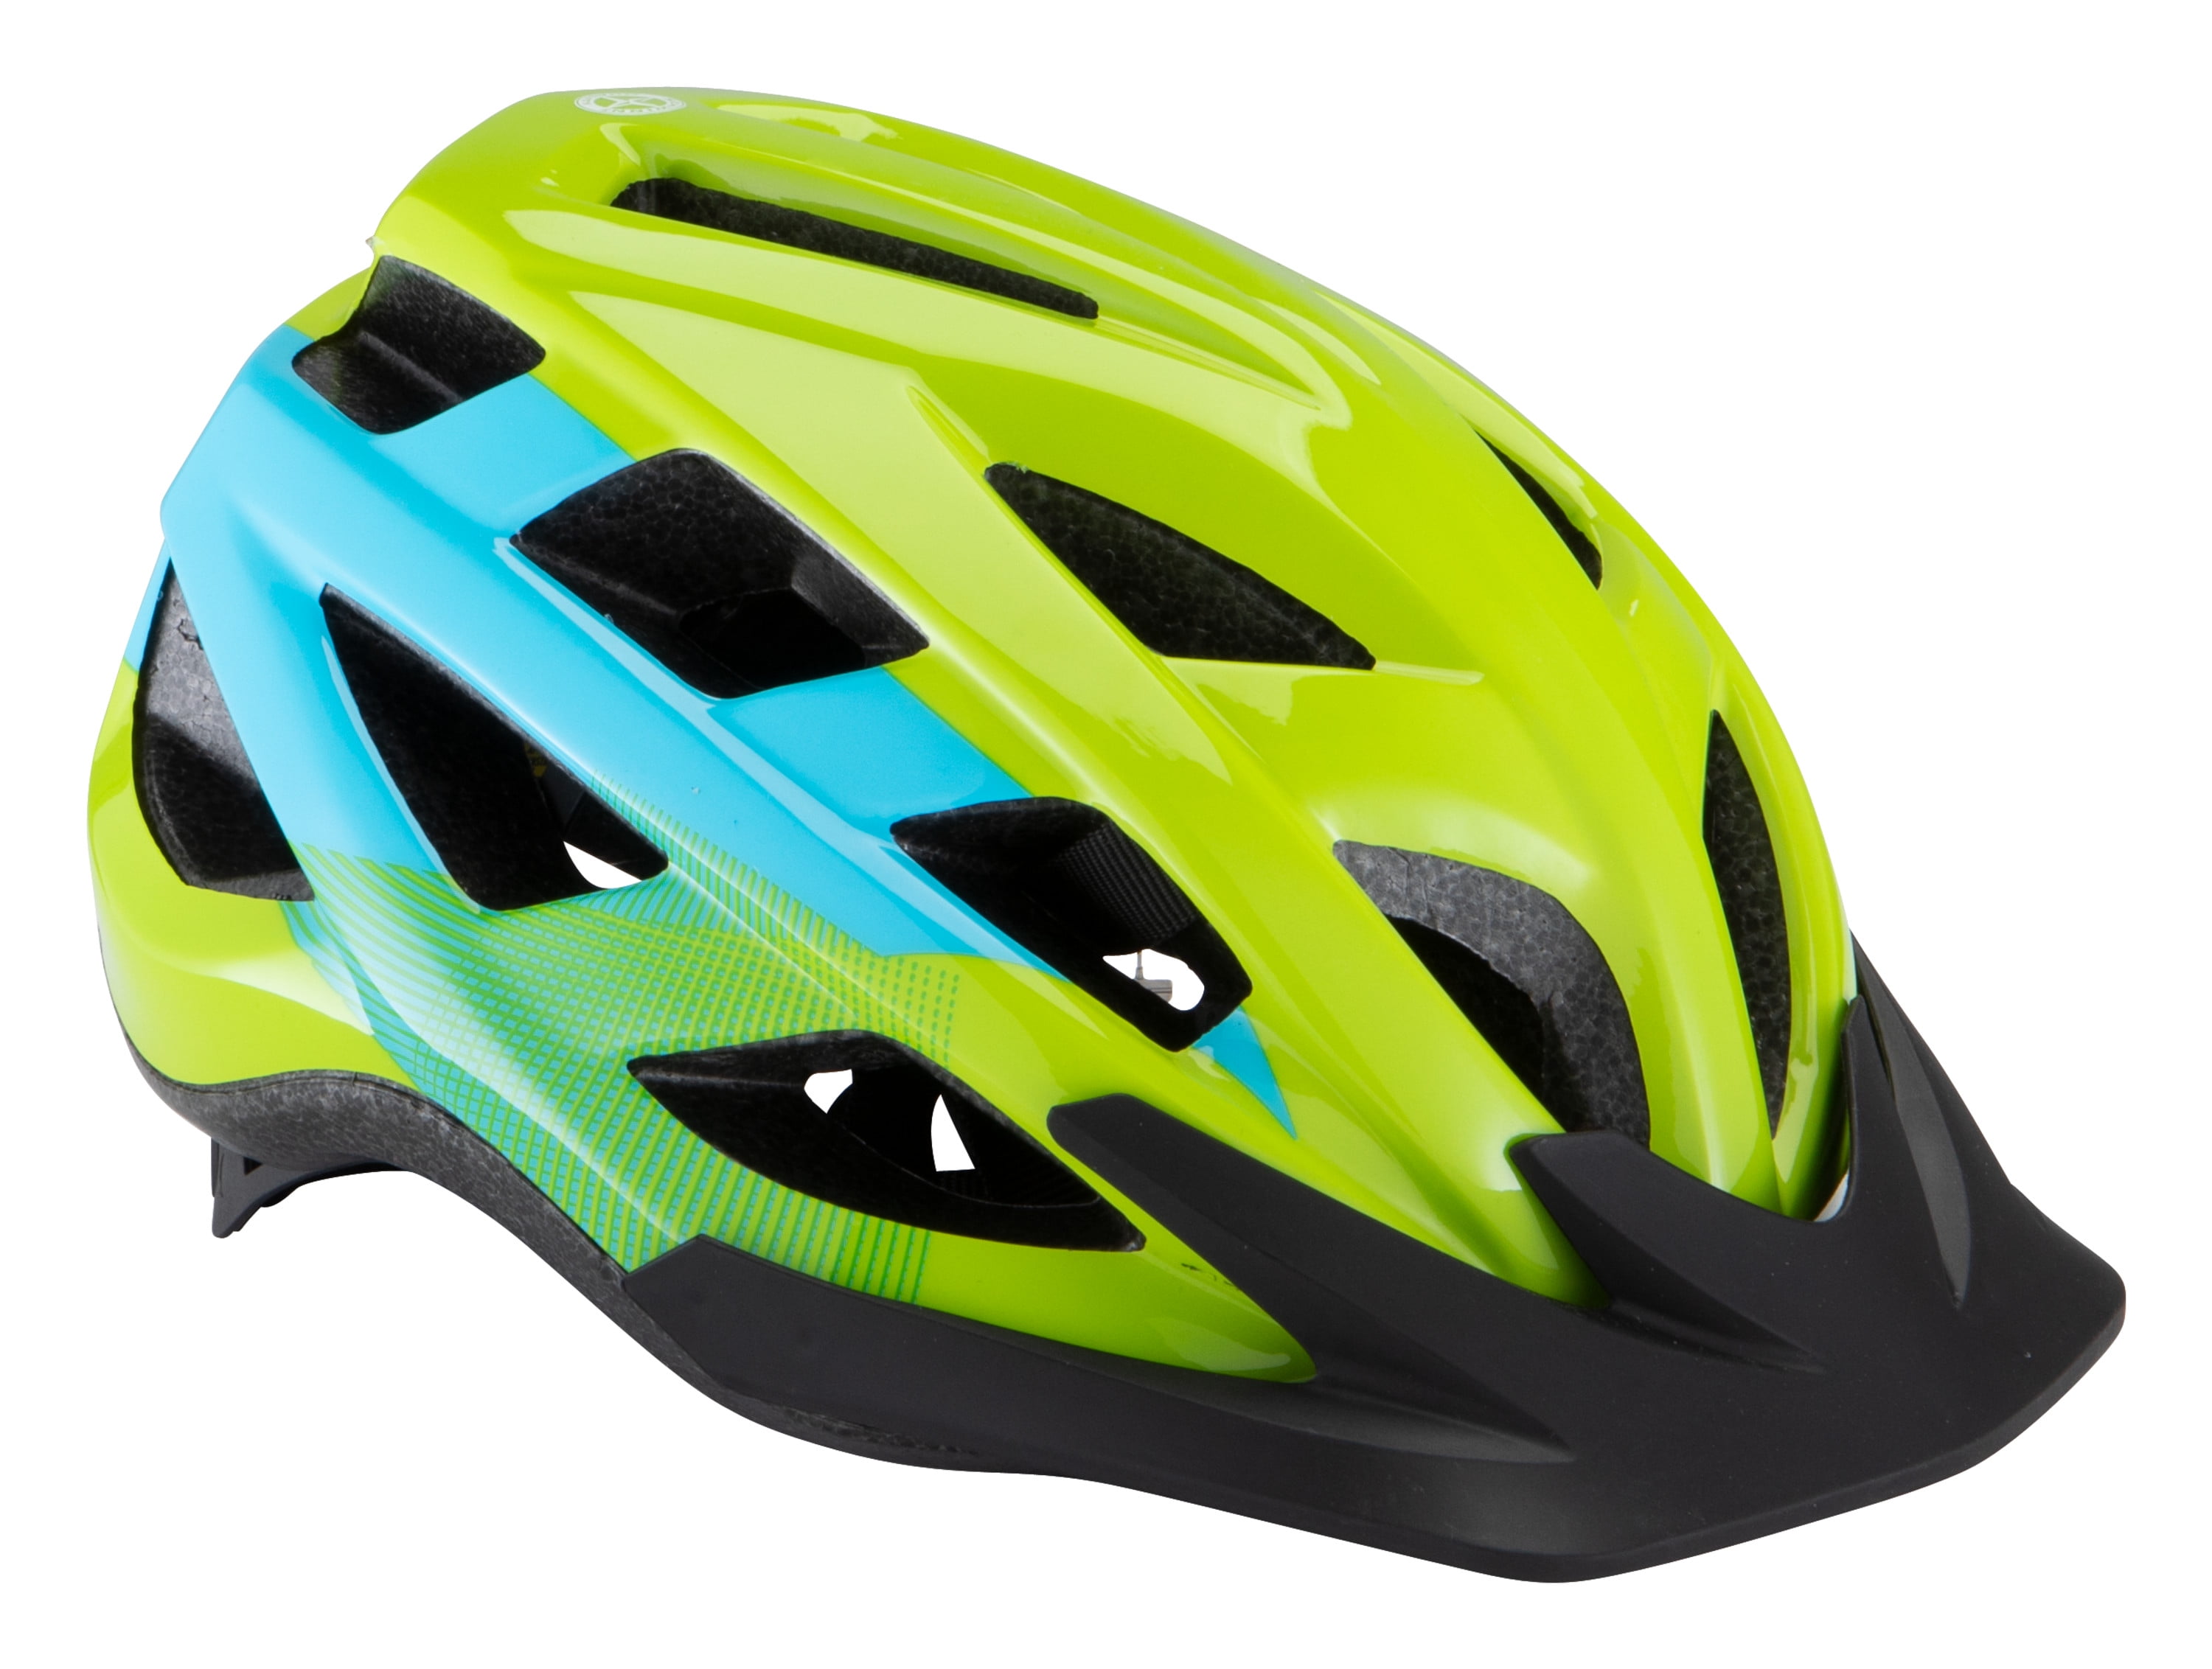 Schwinn Breeze Youth Bike Helmet 360 Degree Comfort Ages 8 Dial Fit With Visor for sale online 